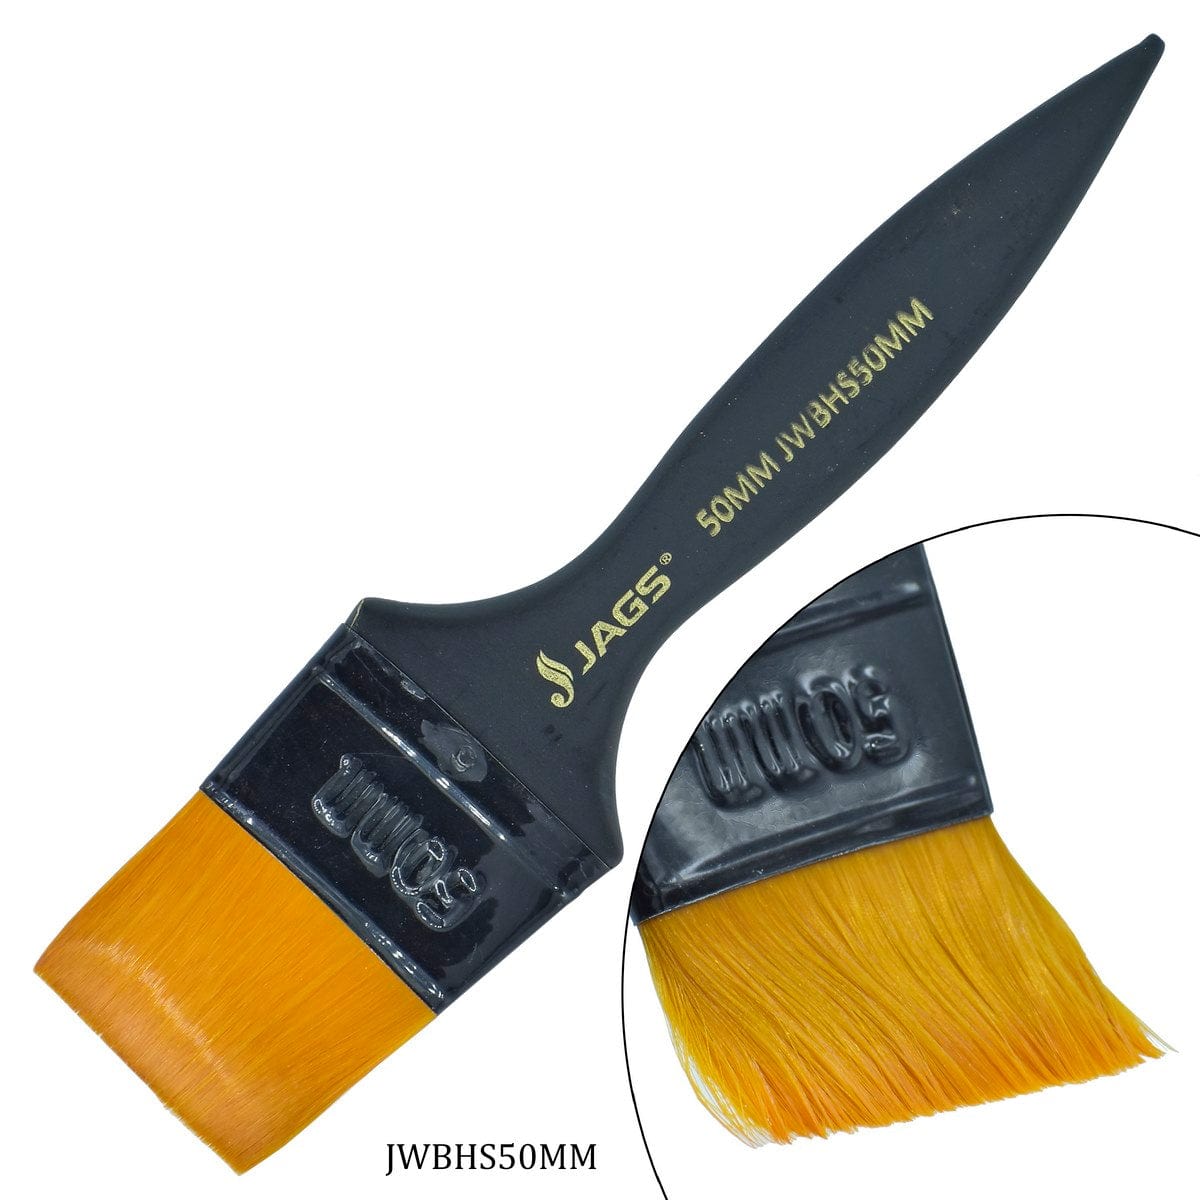 jags-mumbai Brush Jags Wash Brush Synthetic Hair Black Handle 50MM JWBHS50MM